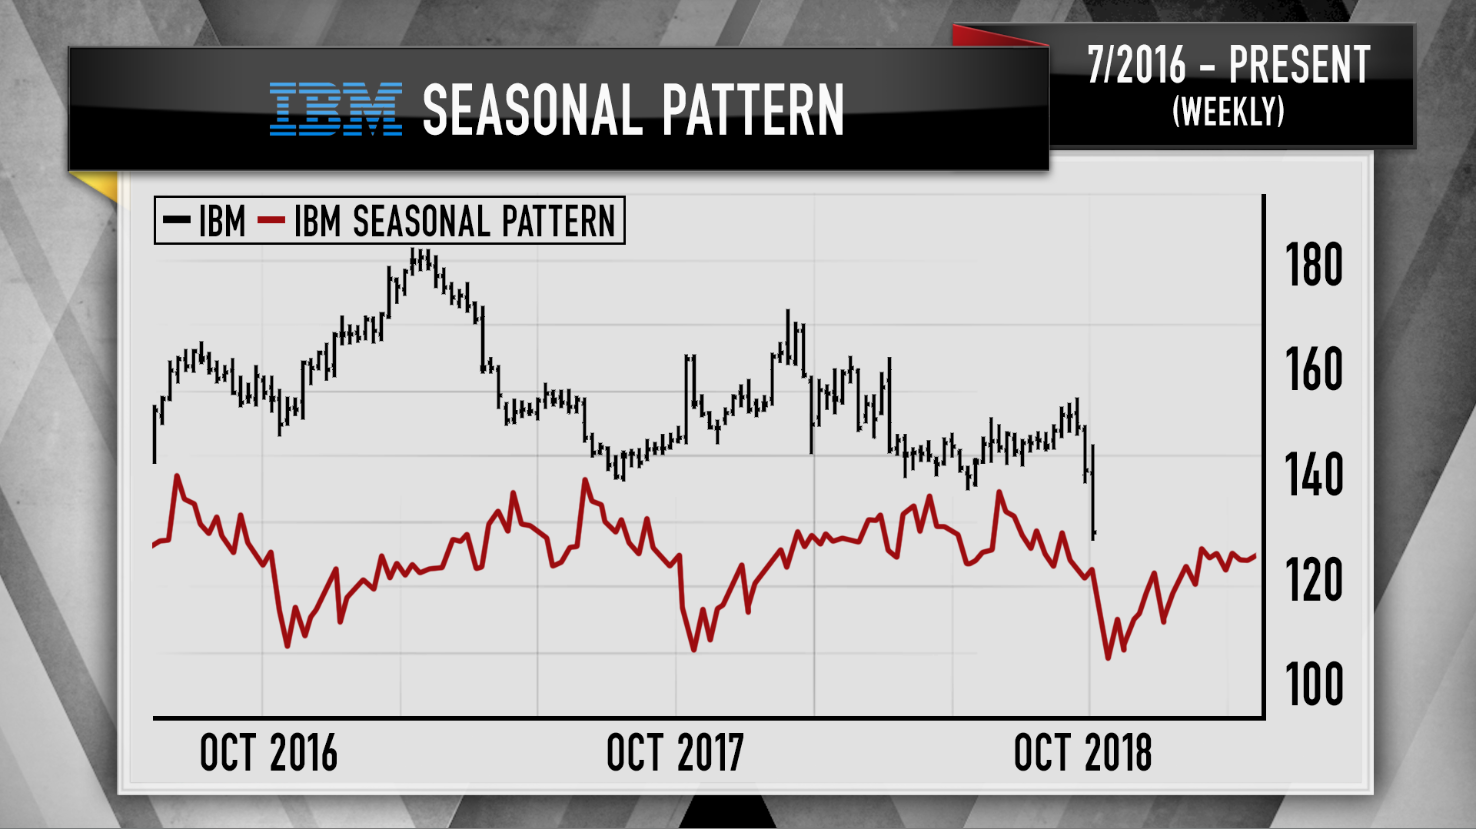 Seasonal Stock Charts